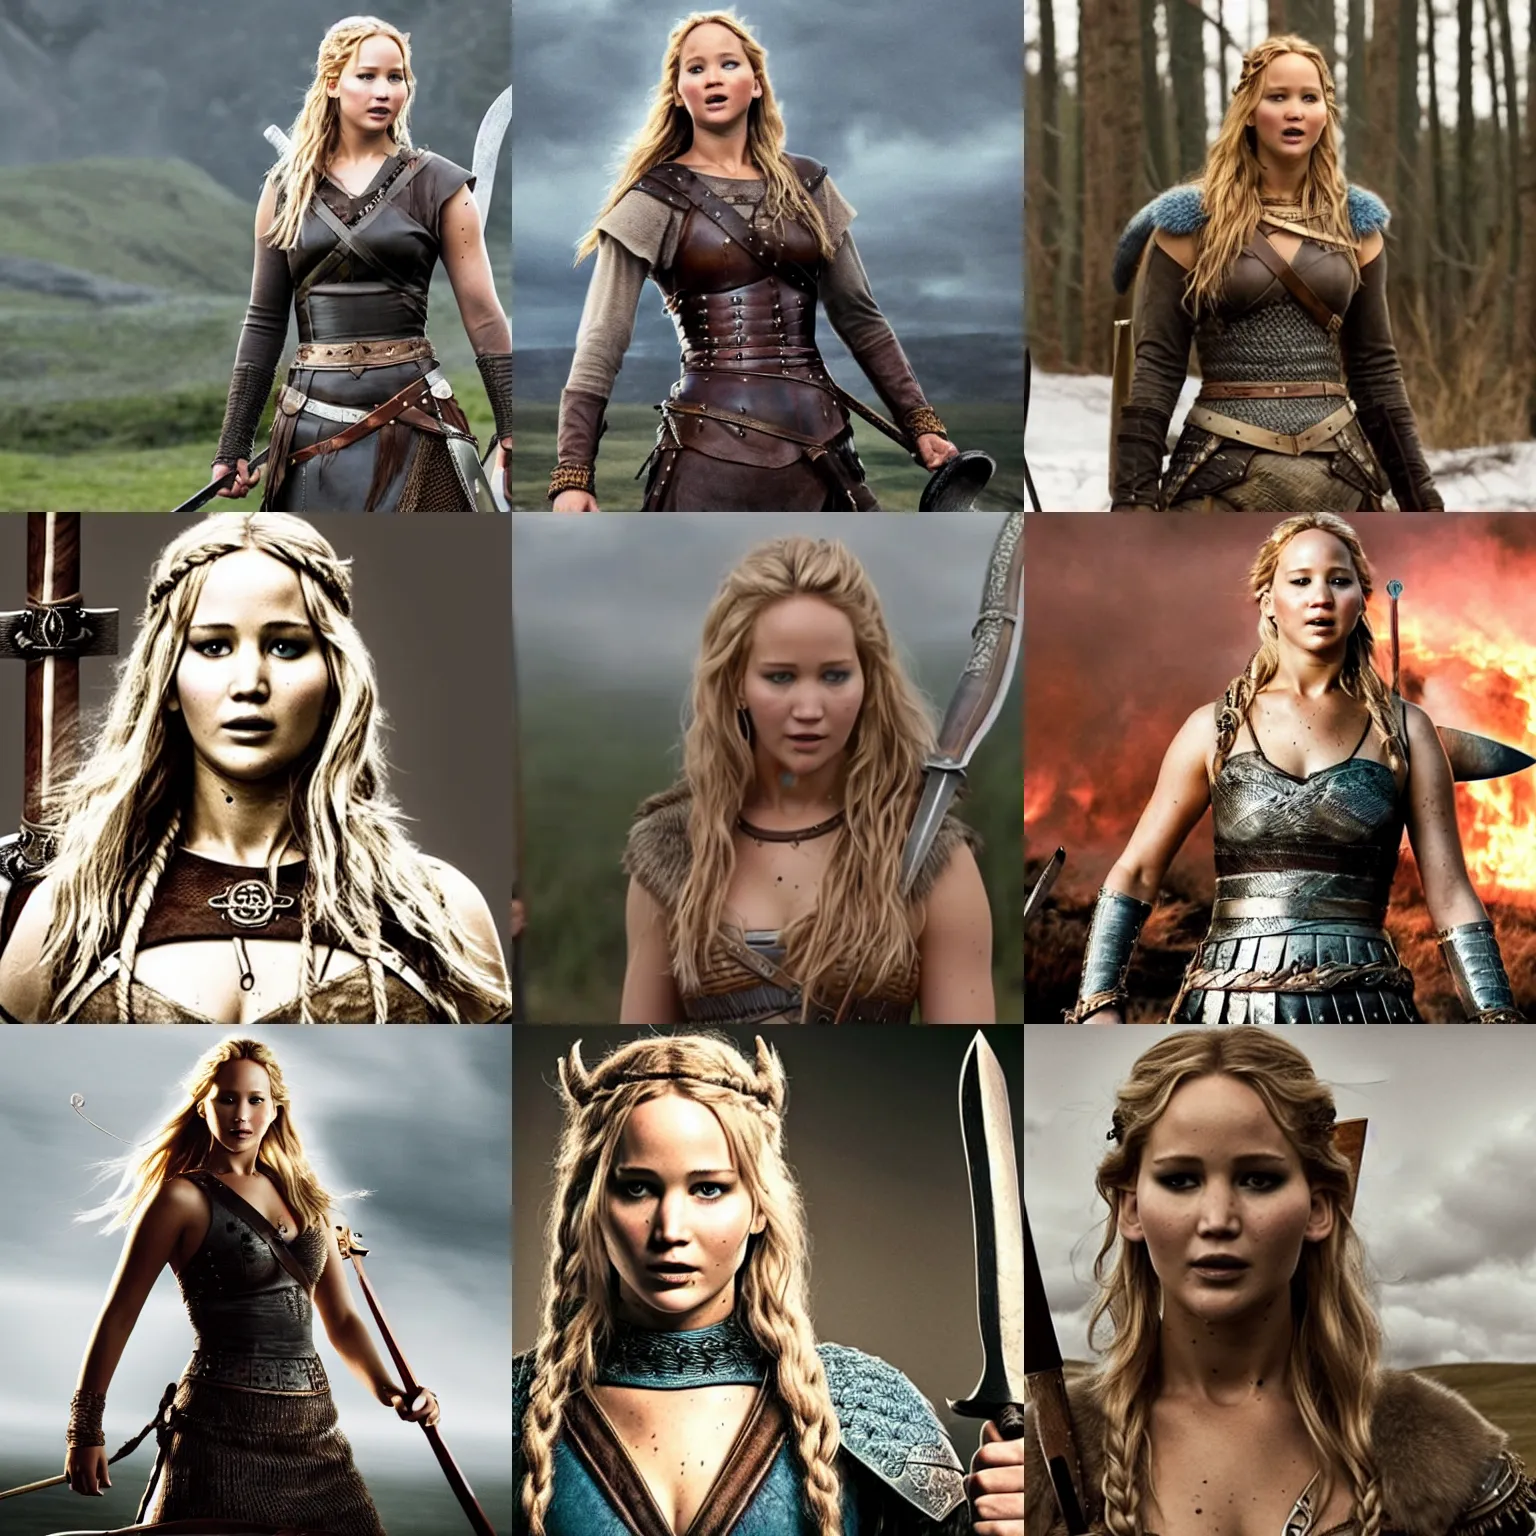 Prompt: Jennifer Lawrence as a Viking shieldmaiden, holding a sword